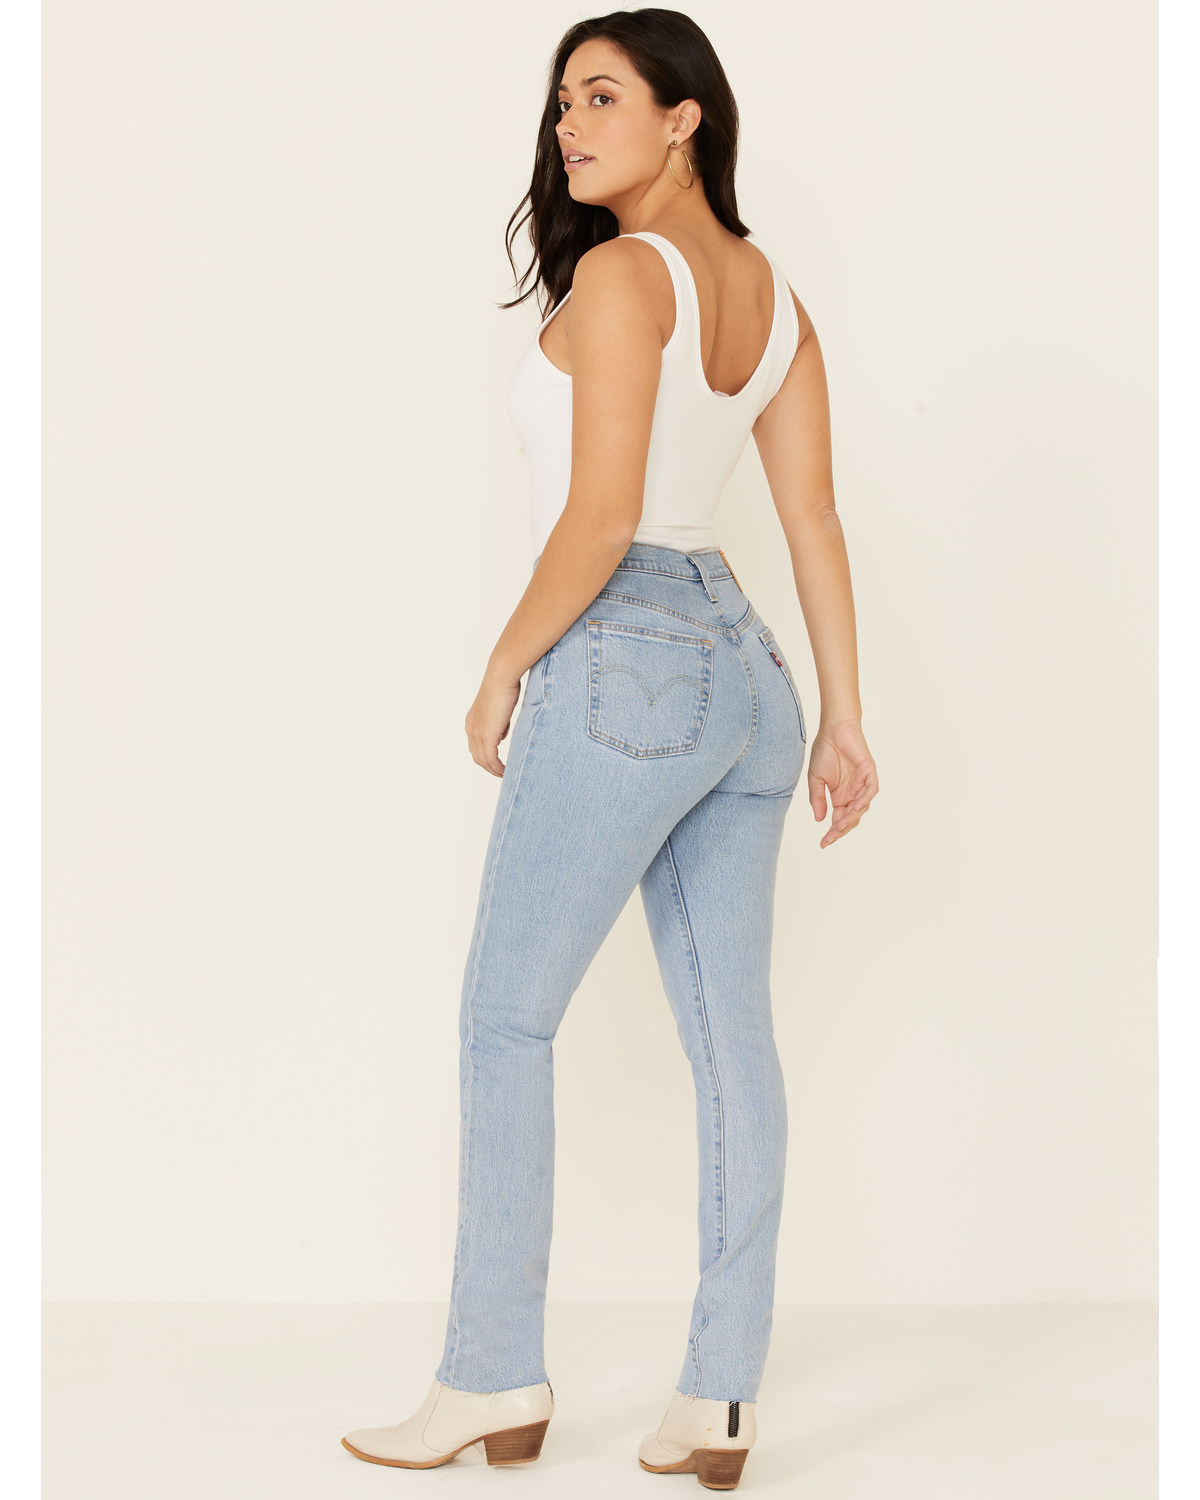 Levi's Women's 501 Fray Hem Skinny Jeans